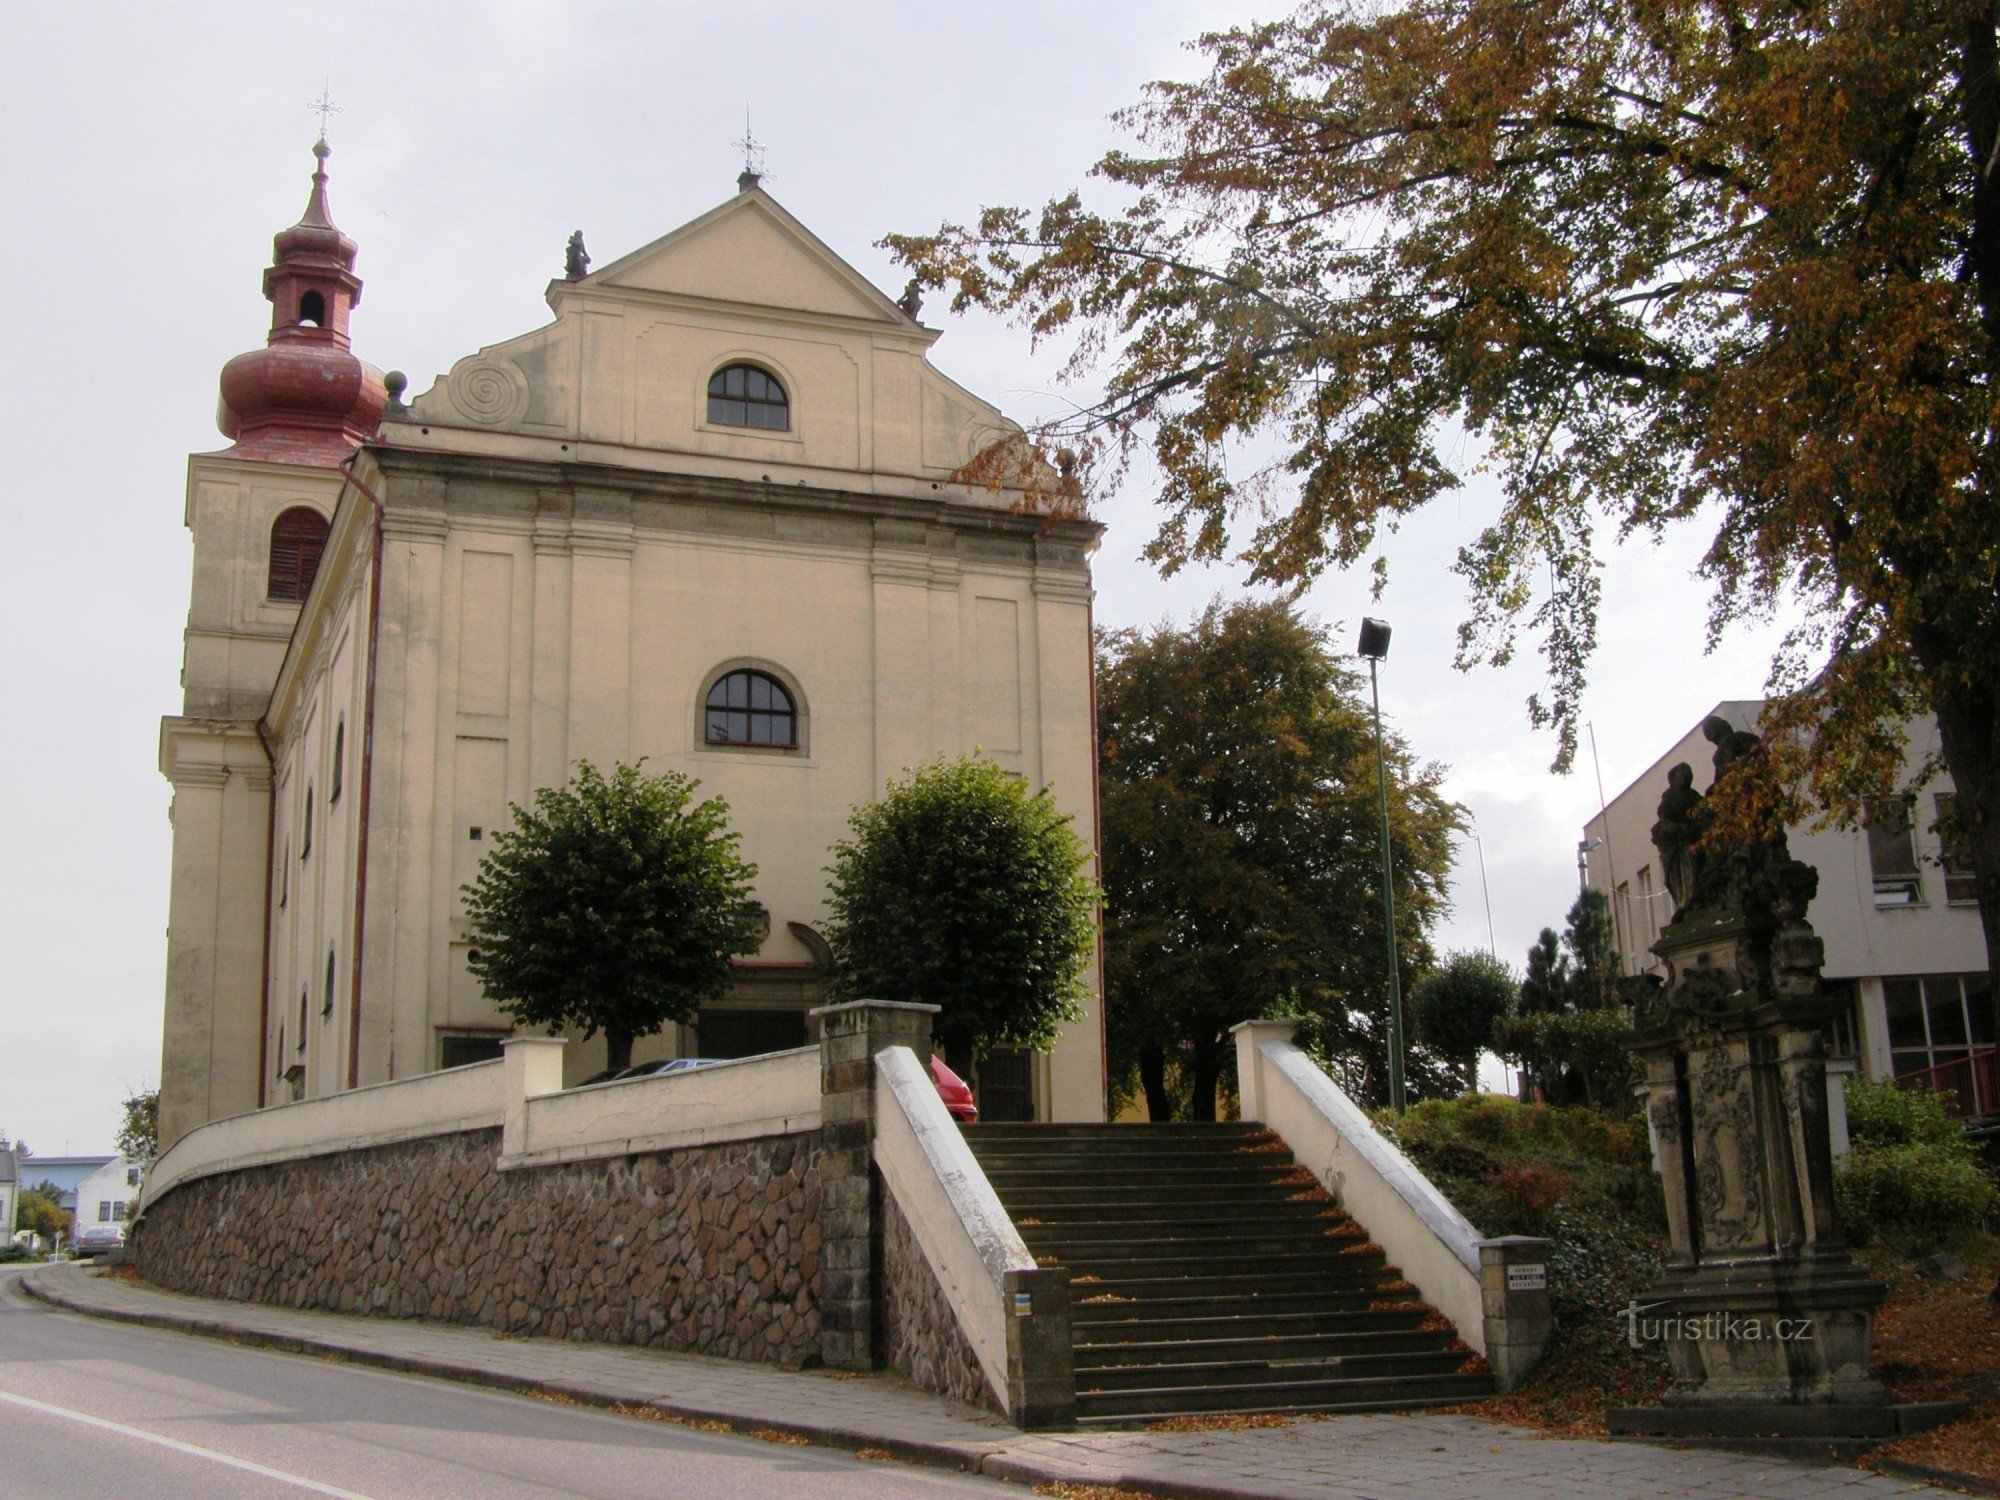 Vamberk - Biserica Sf. Procopius